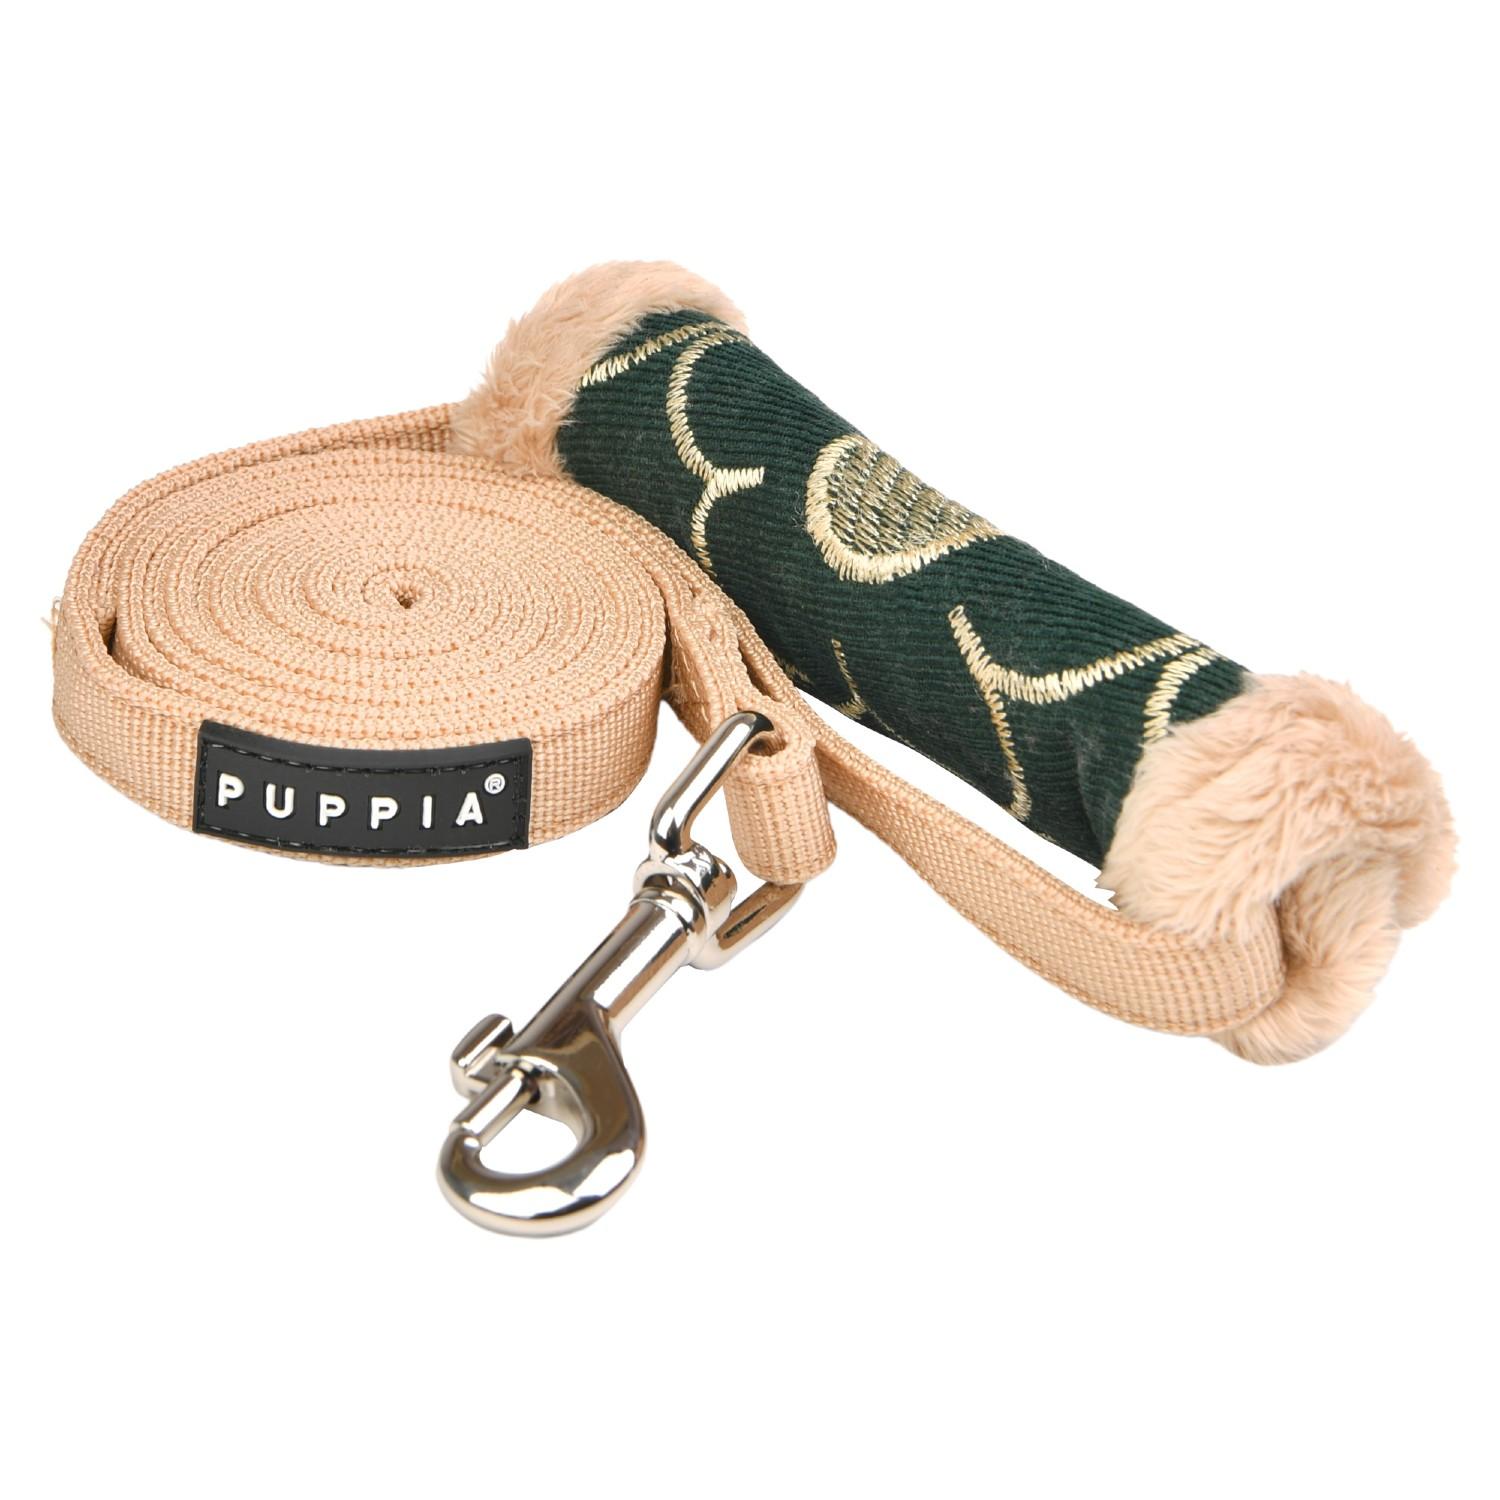 Florent Dog Leash by Puppia - Khaki